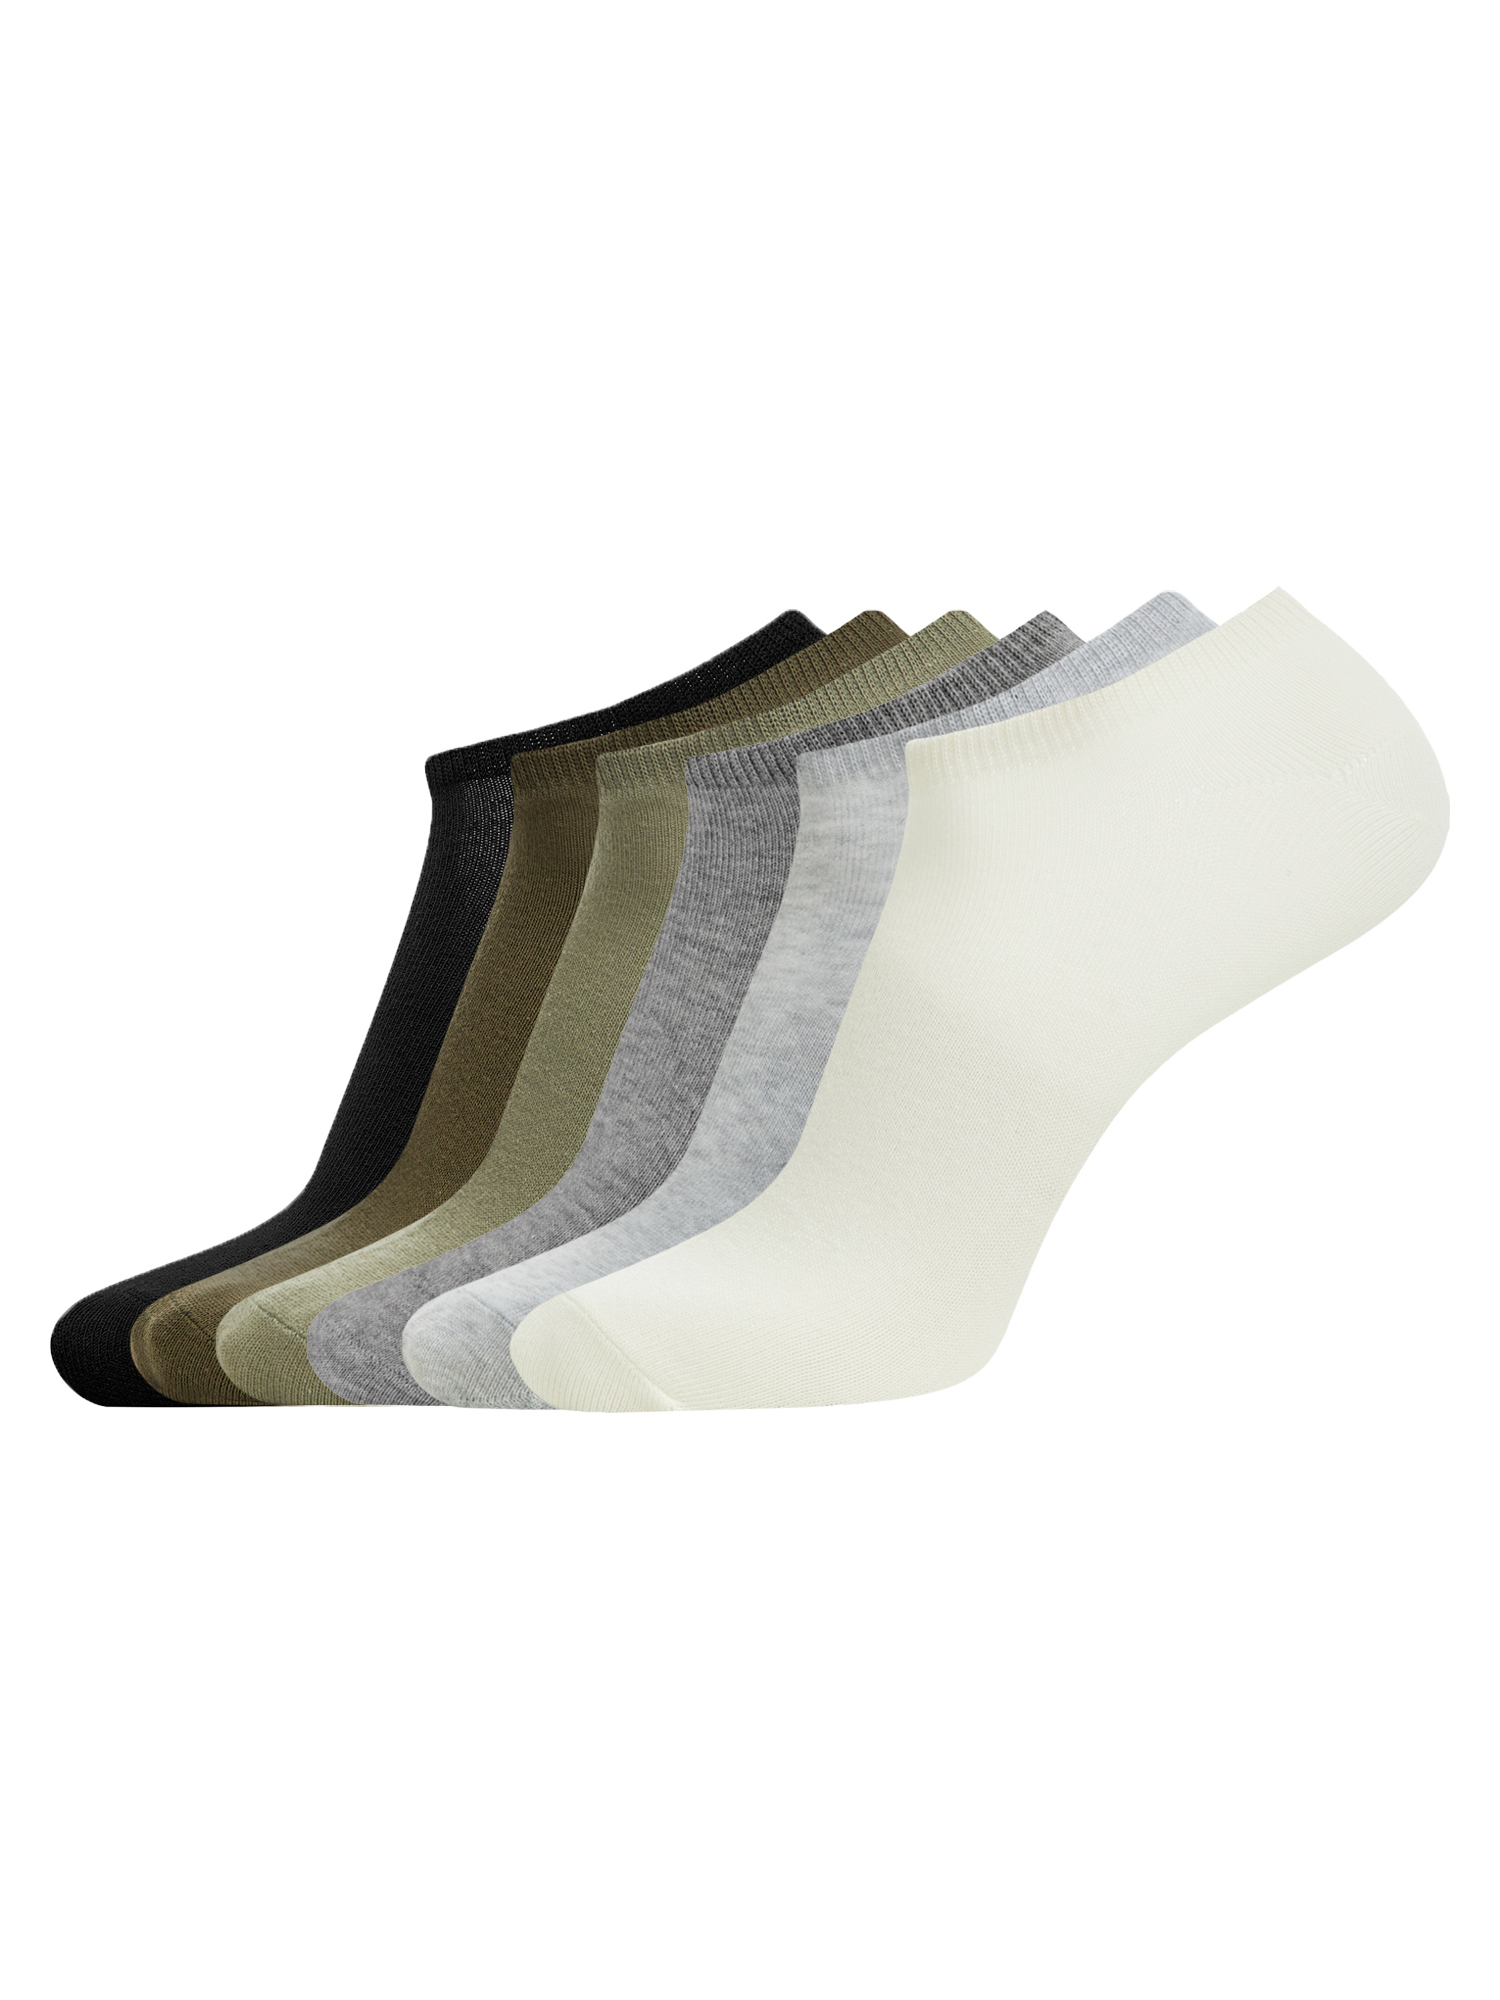 Комплект носков мужских oodji 7B261000T6 разноцветных 44-47 6 пар